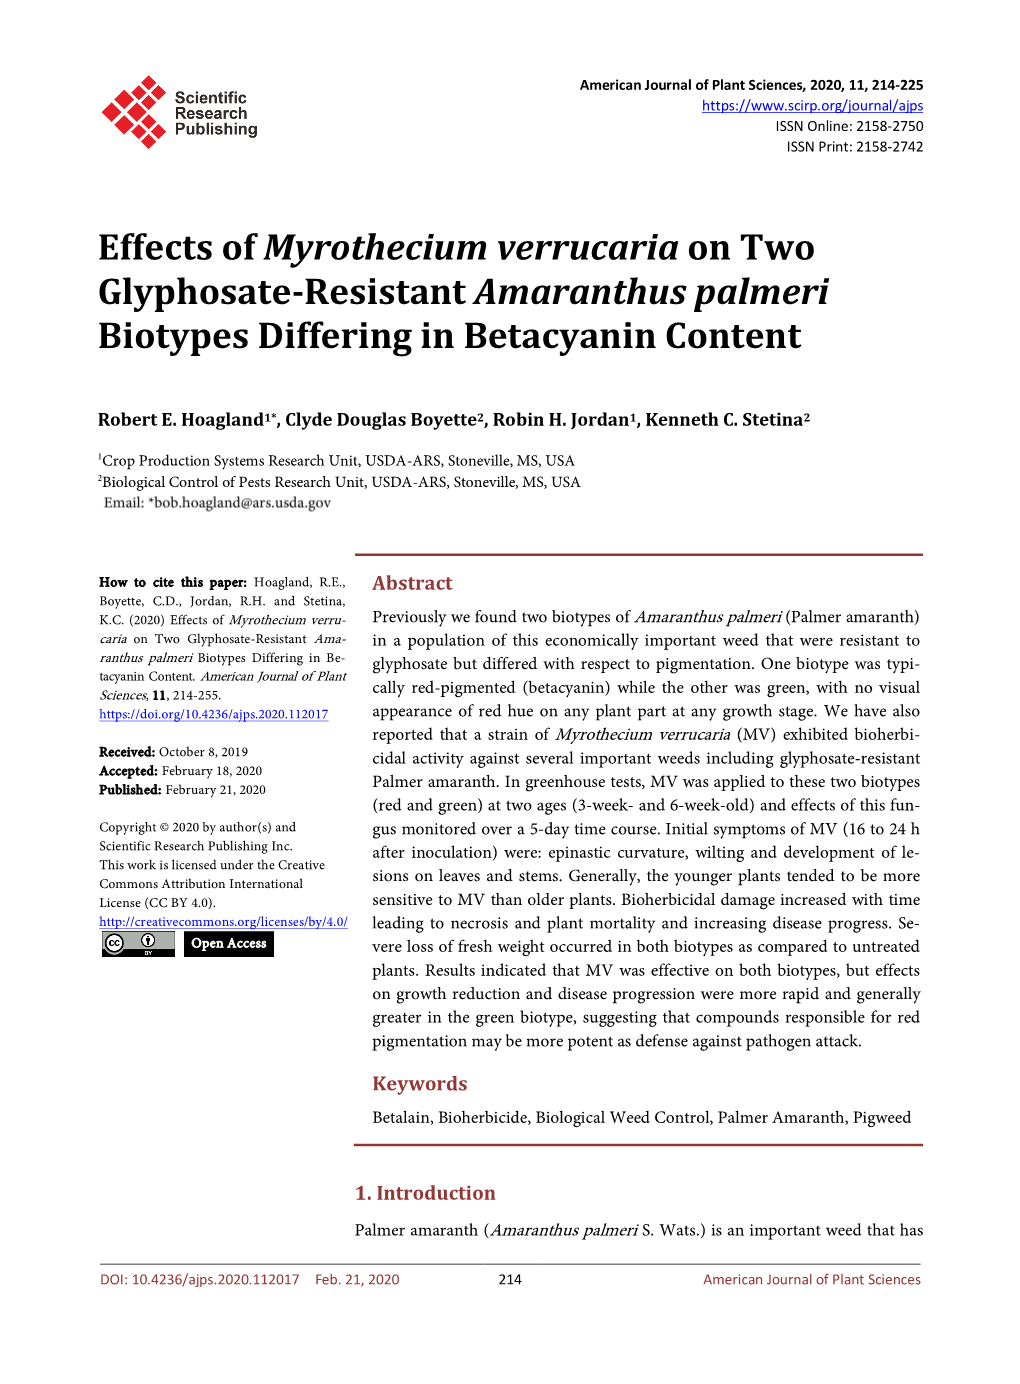 Effects of Myrothecium Verrucaria on Two Glyphosate-Resistant Amaranthus Palmeri Biotypes Differing in Betacyanin Content